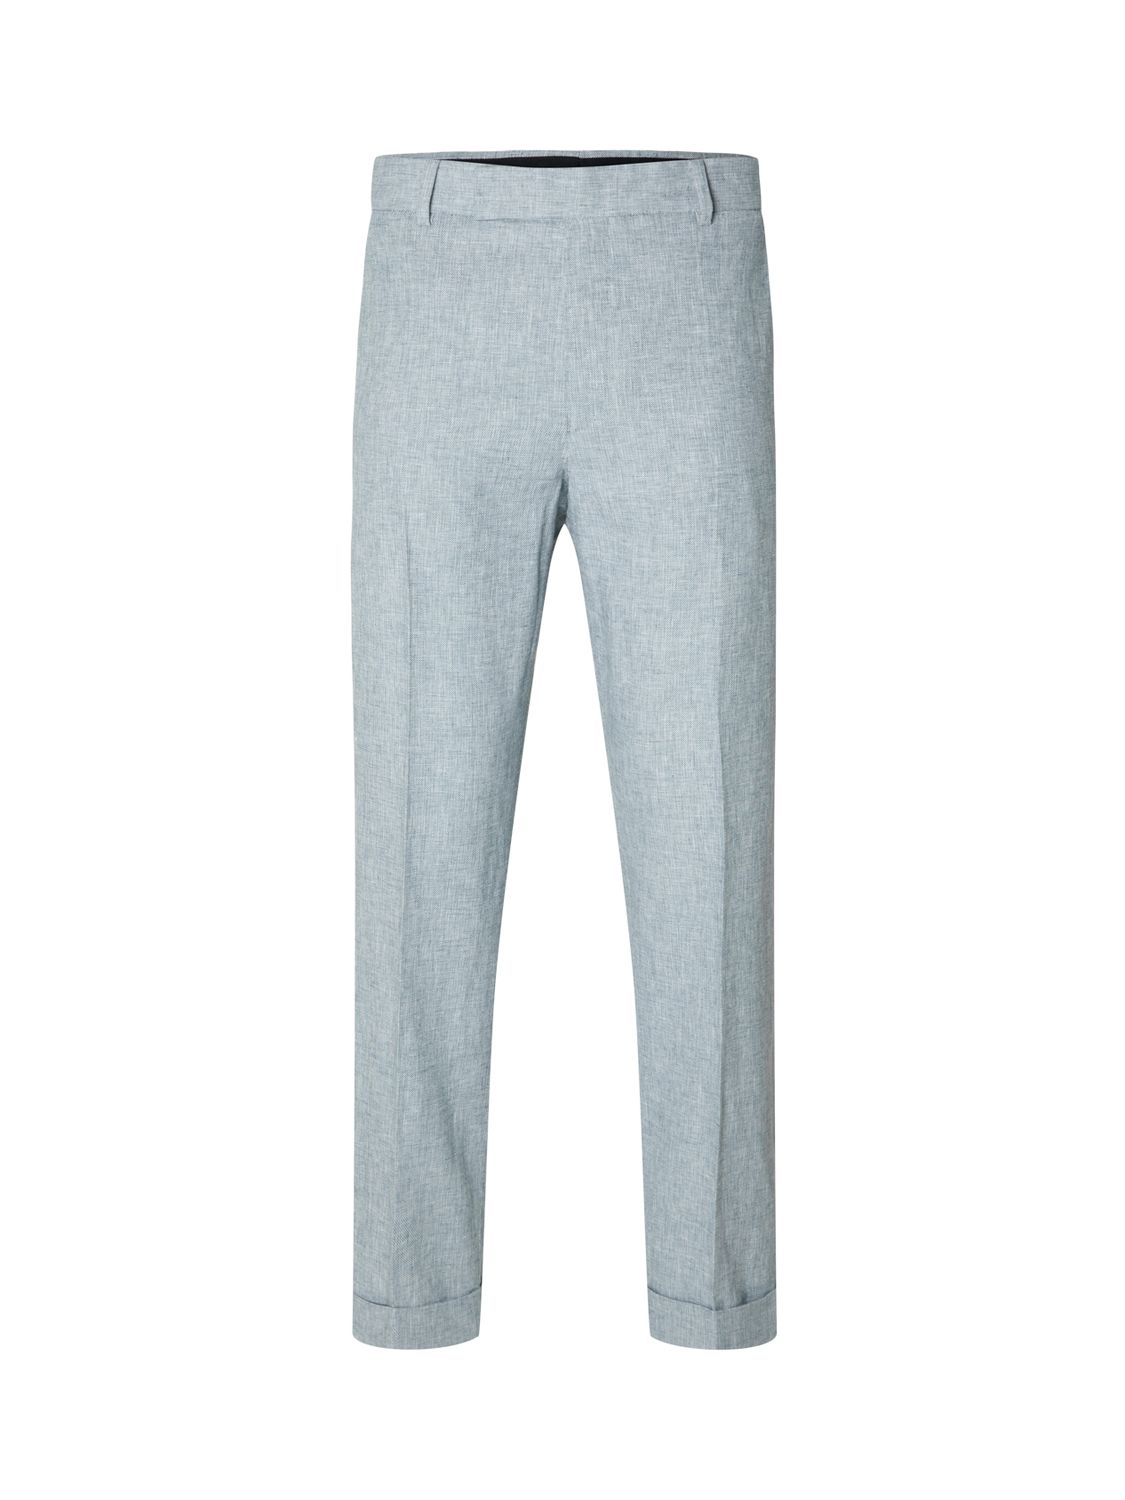 Buy SELECTED HOMME Anton Linen Blend Suit Trousers, Light Blue Online at johnlewis.com